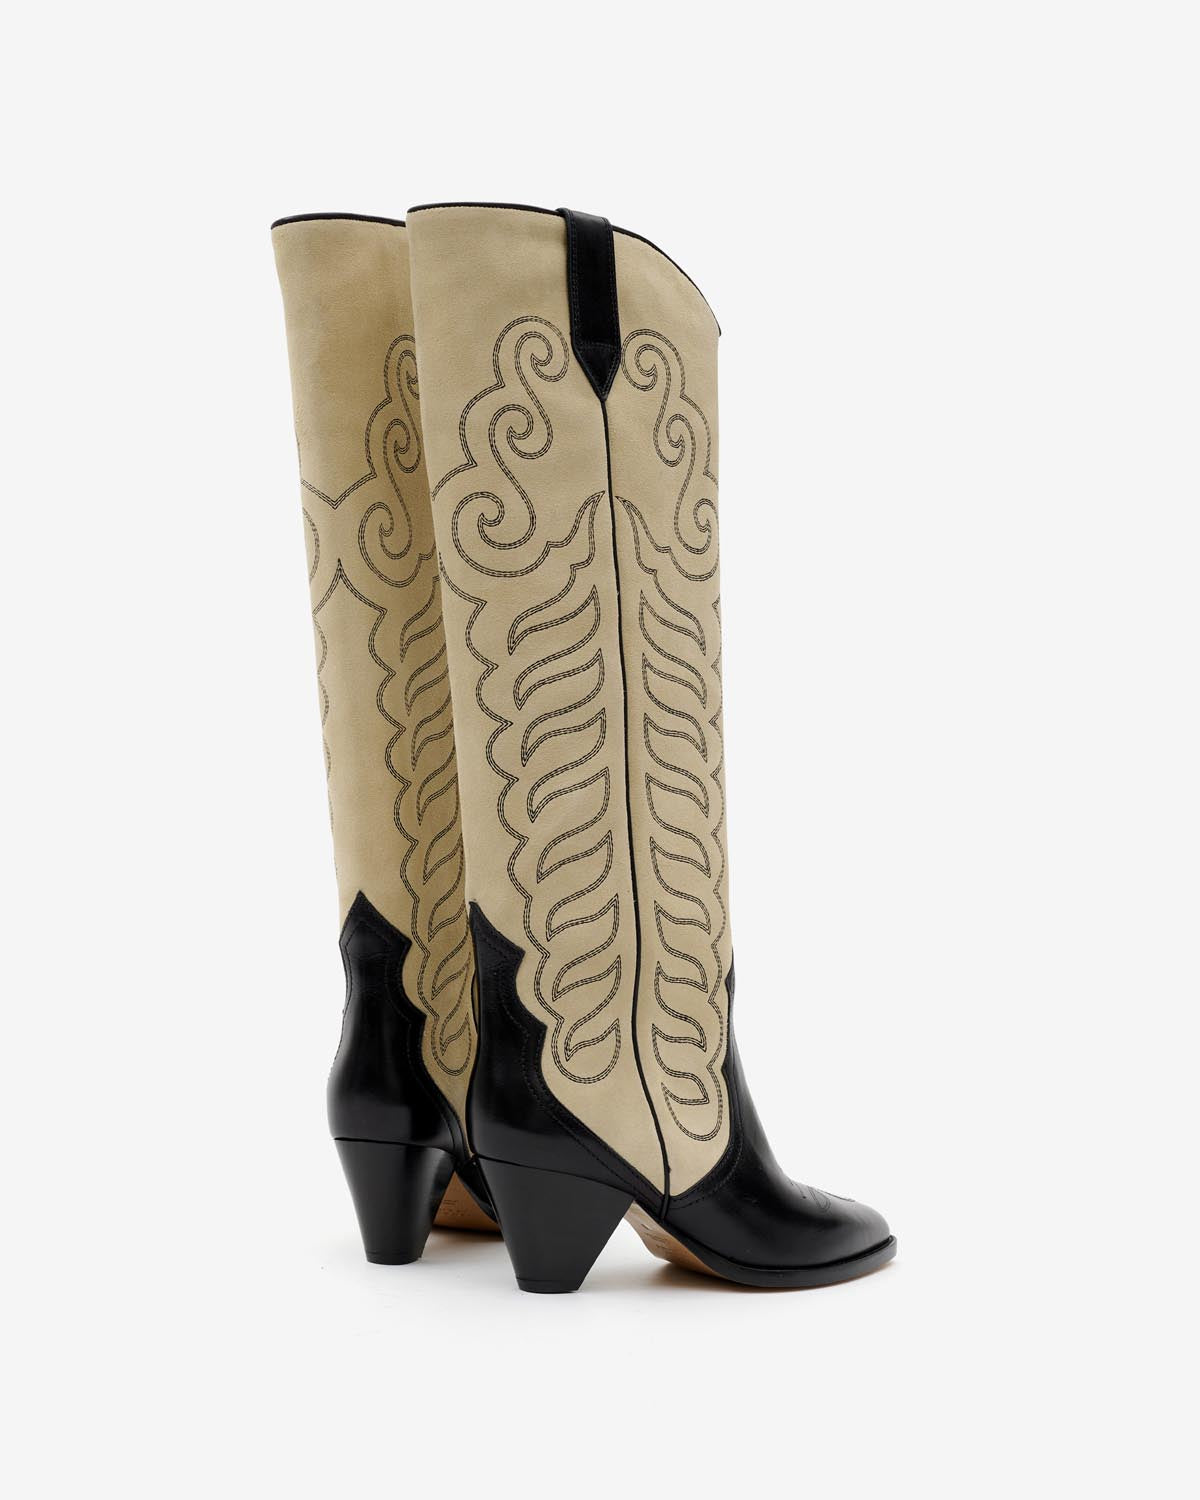 Liela boots Woman Black and ecru 2